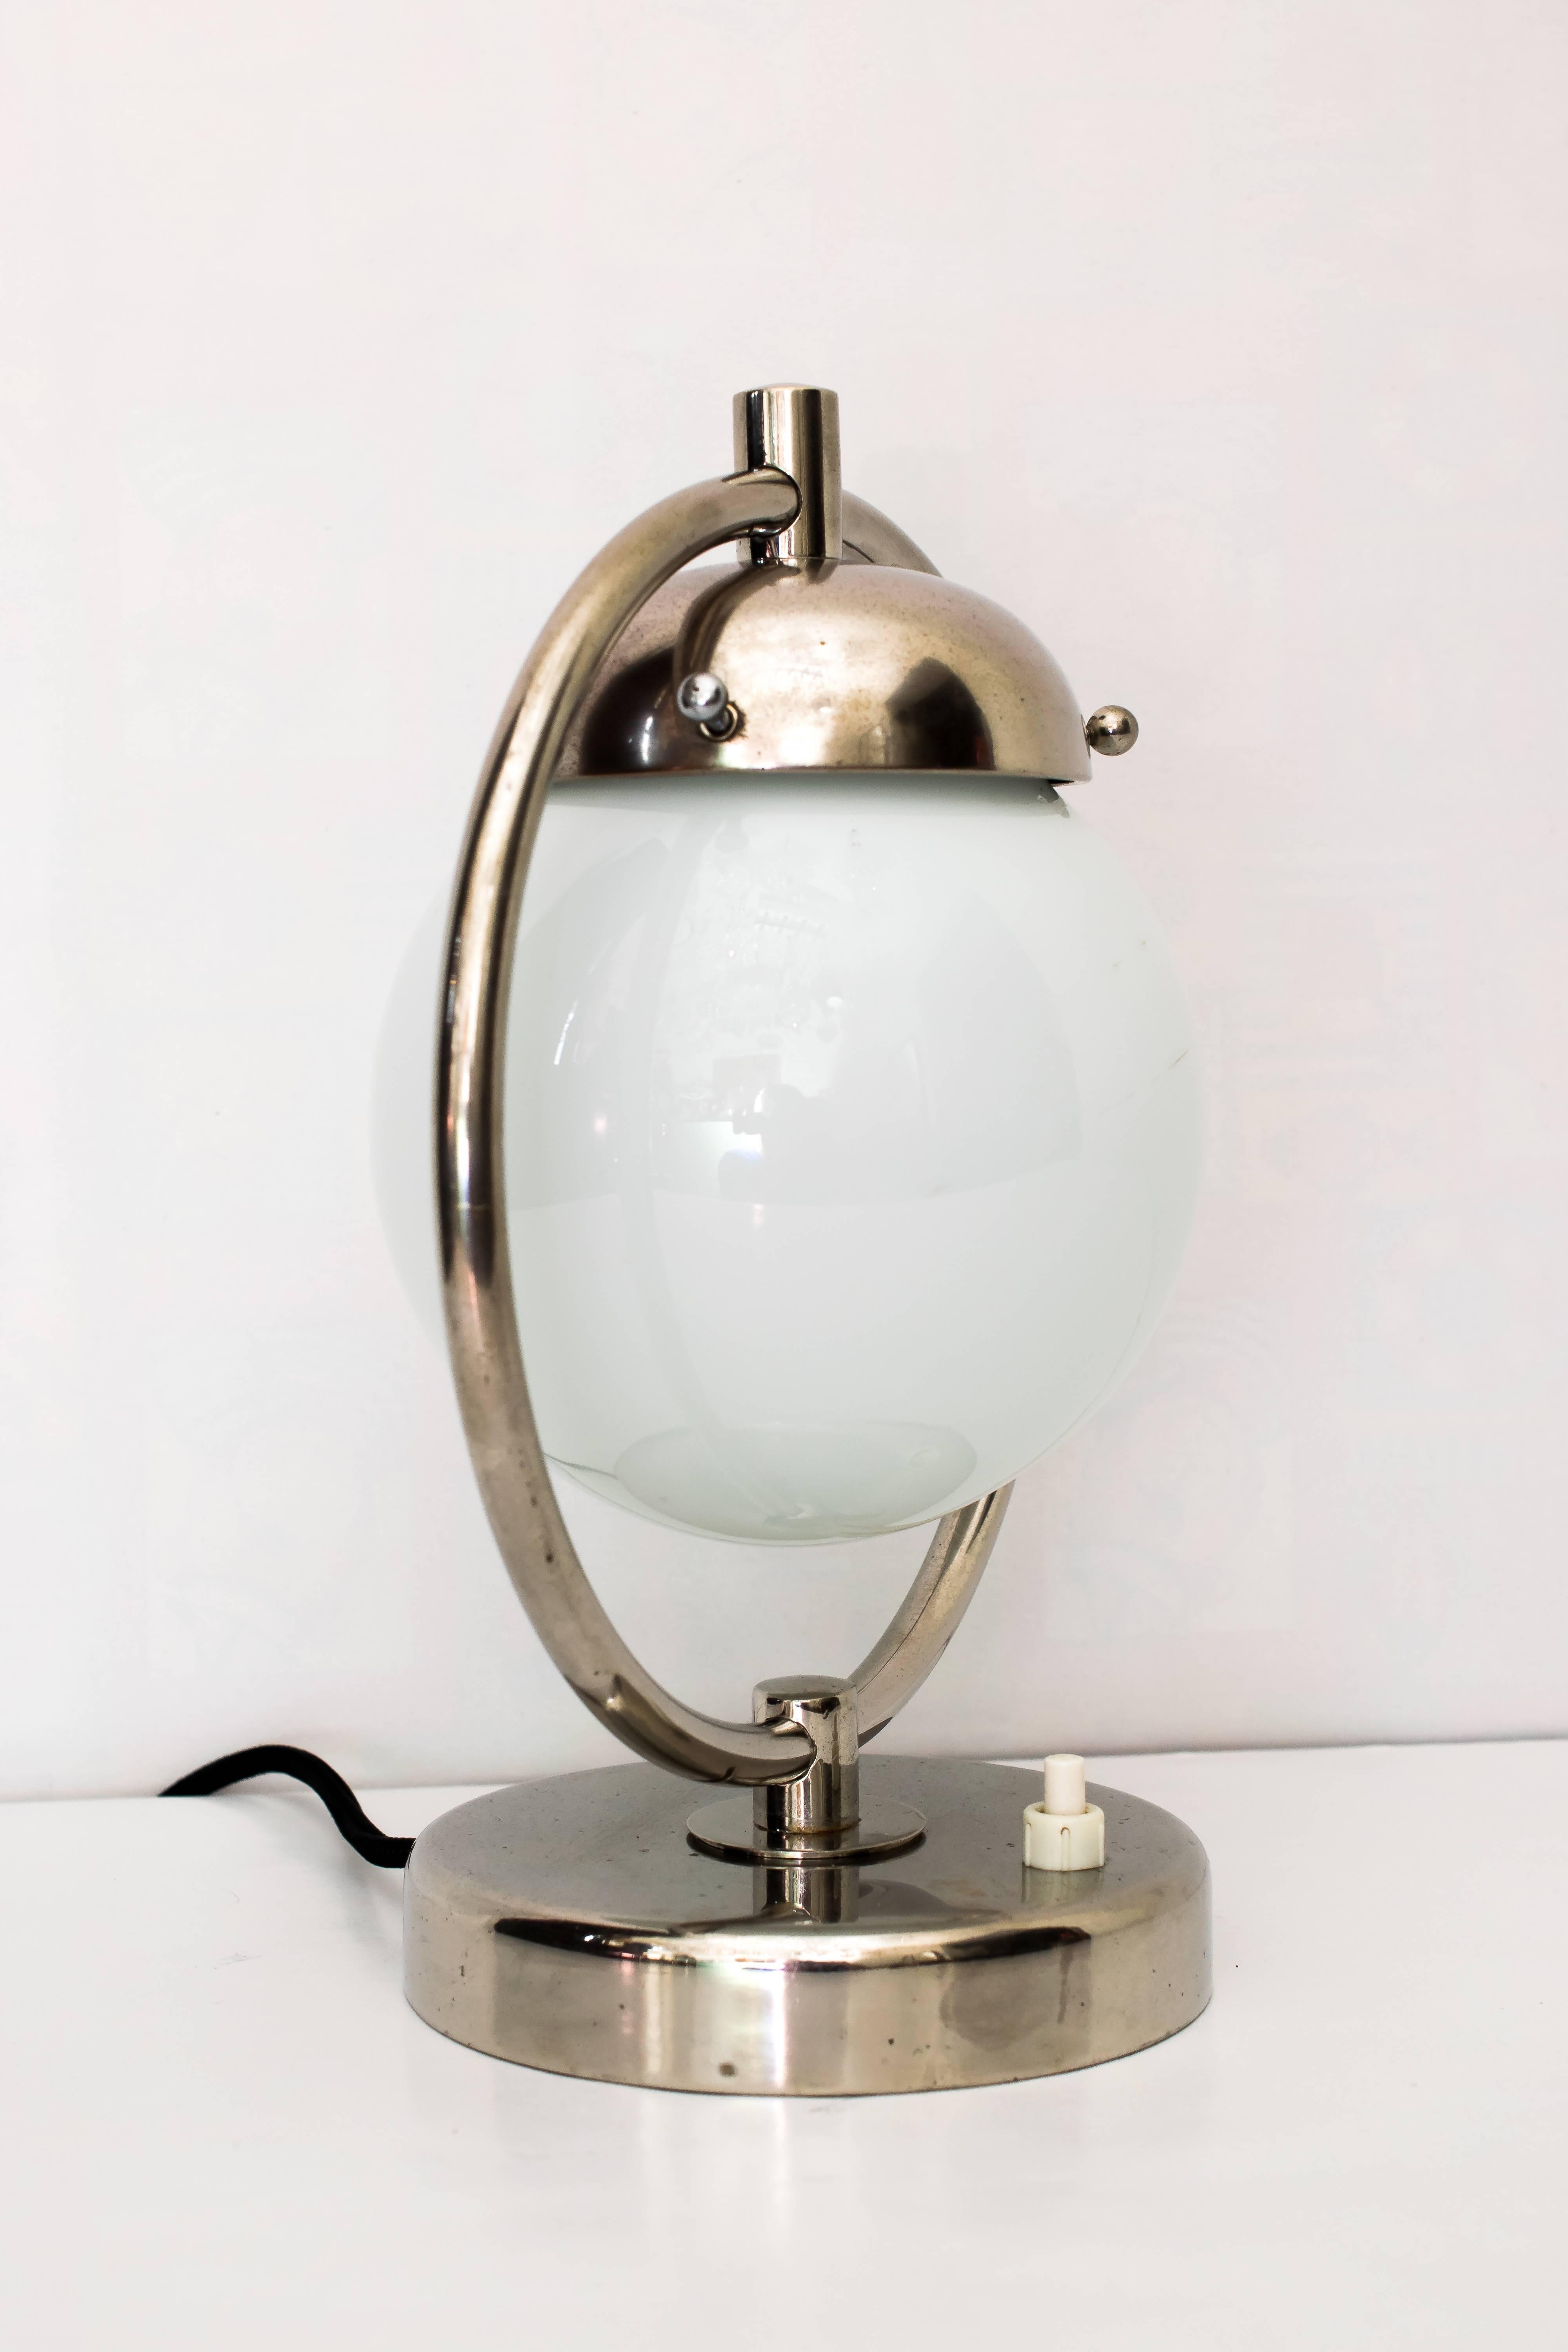 Art Deco Table lamp 1920s
Original glass
Original condition